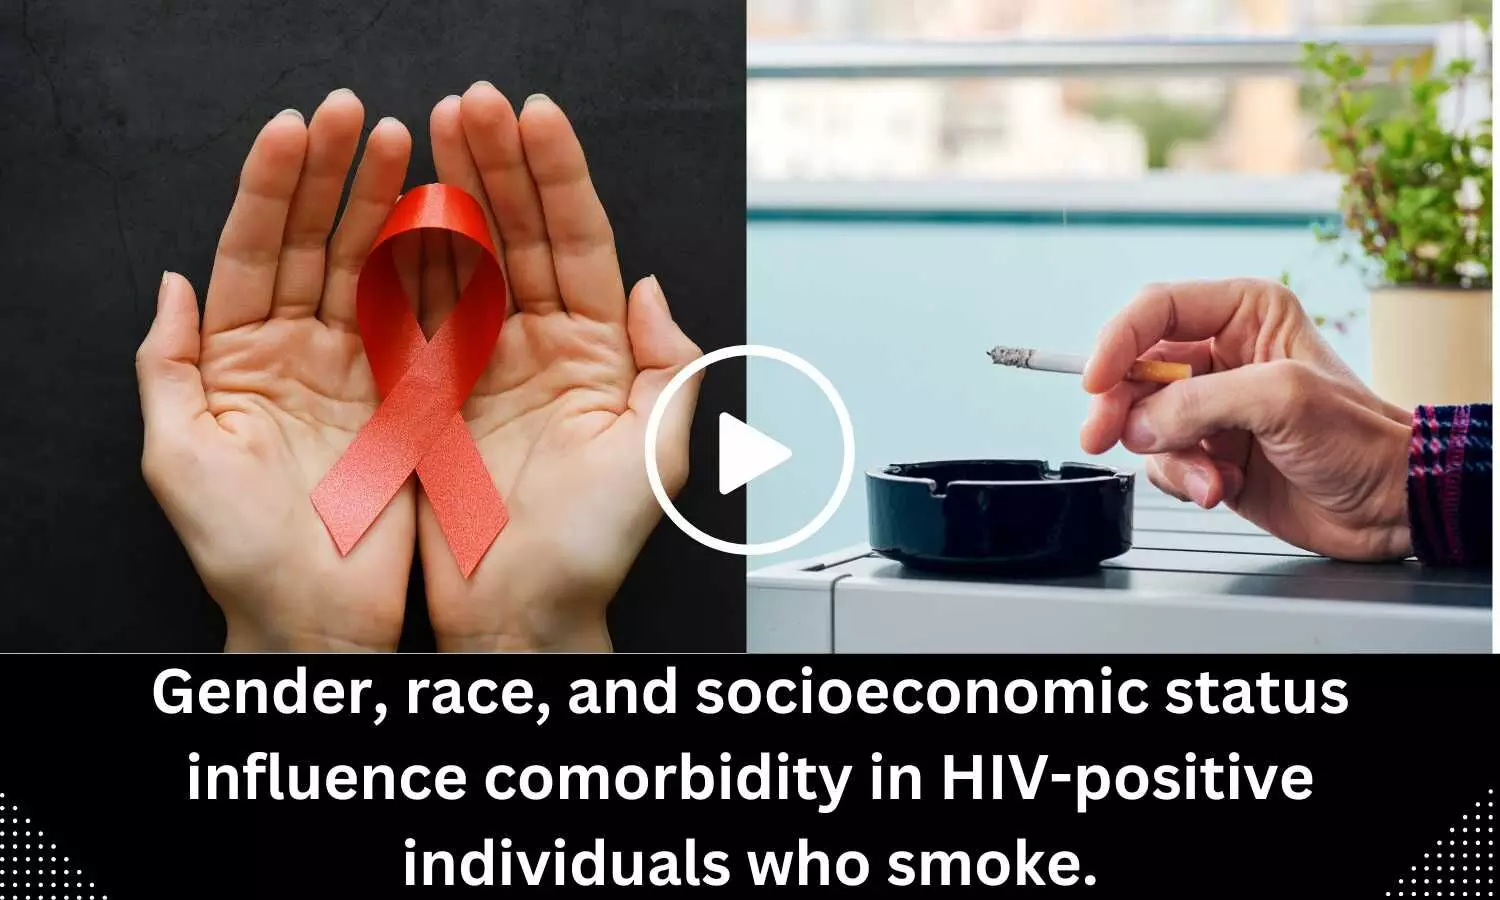 Gender, race, and socioeconomic status influence comorbidity in HIV-positive individuals who smoke.